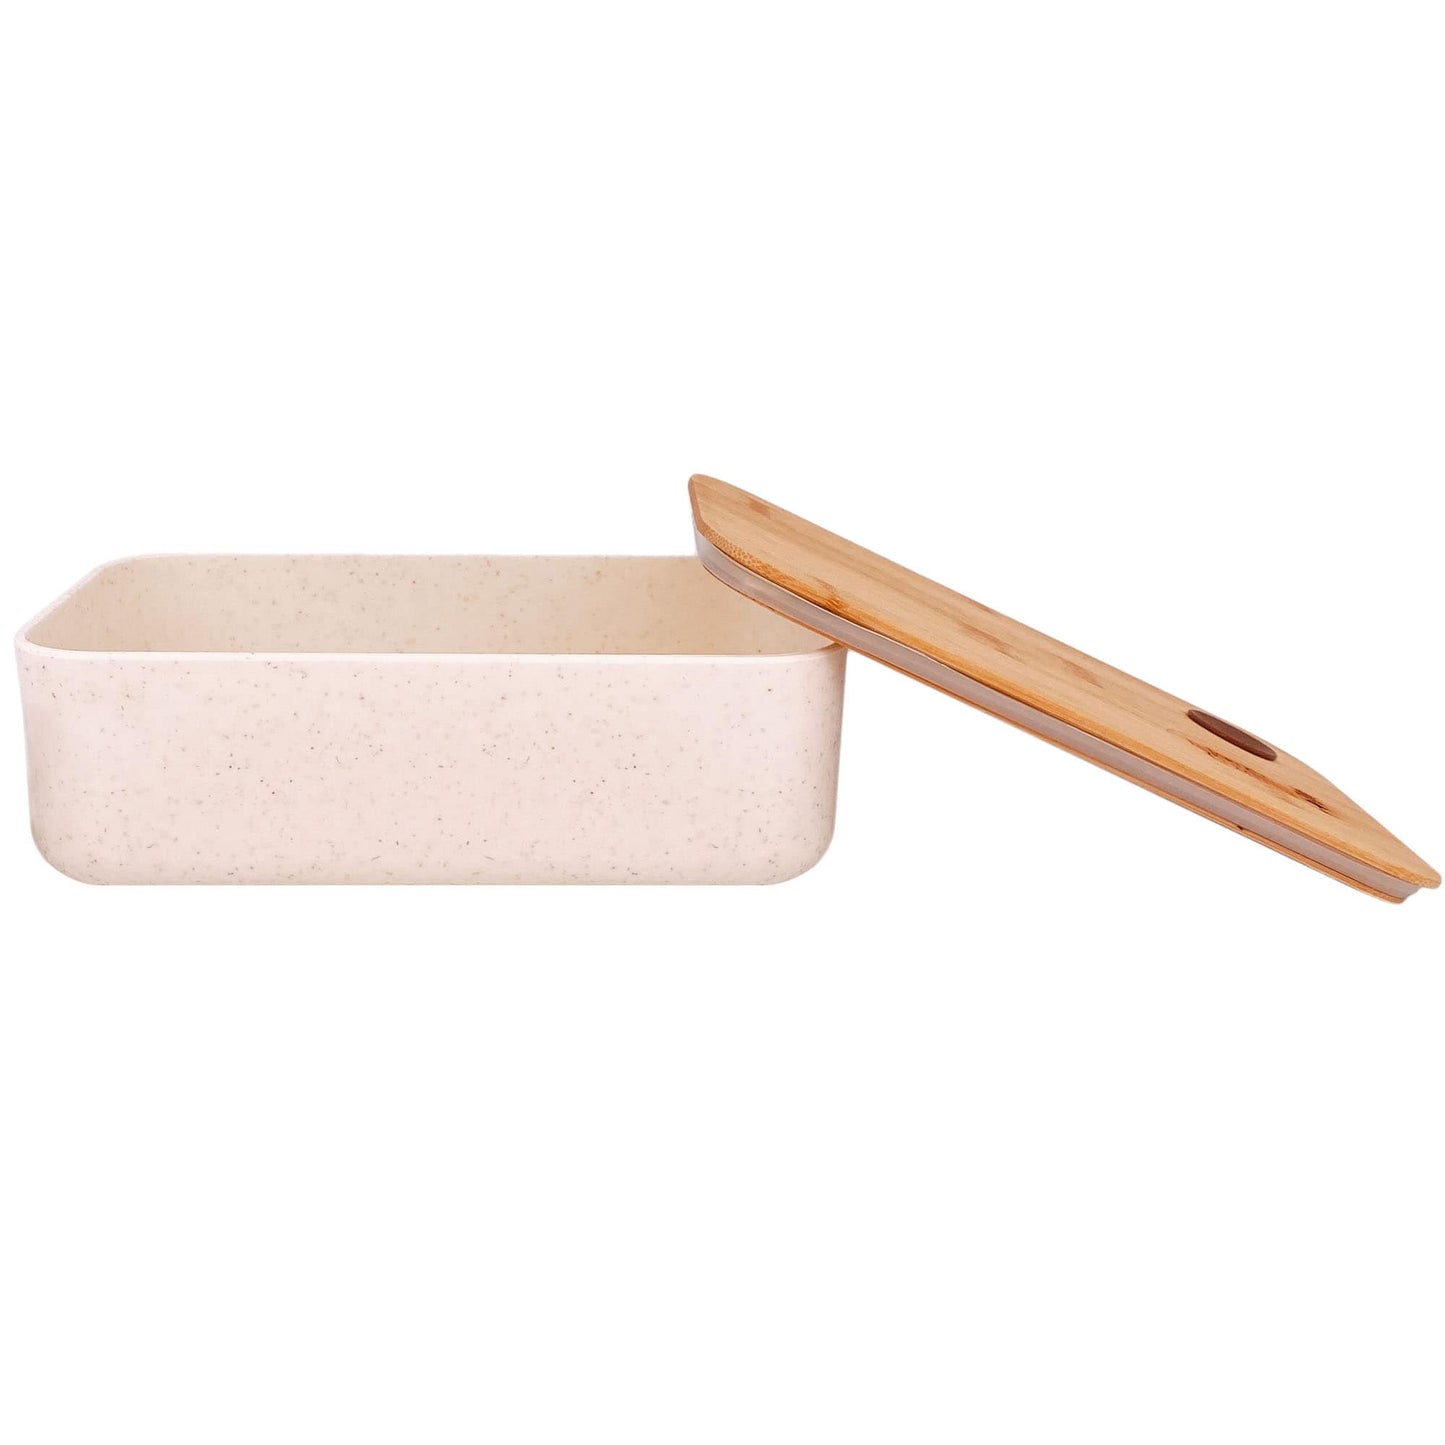 Lunchbox op basis van tarwevezels met bamboe deksel - kan in de magnetron